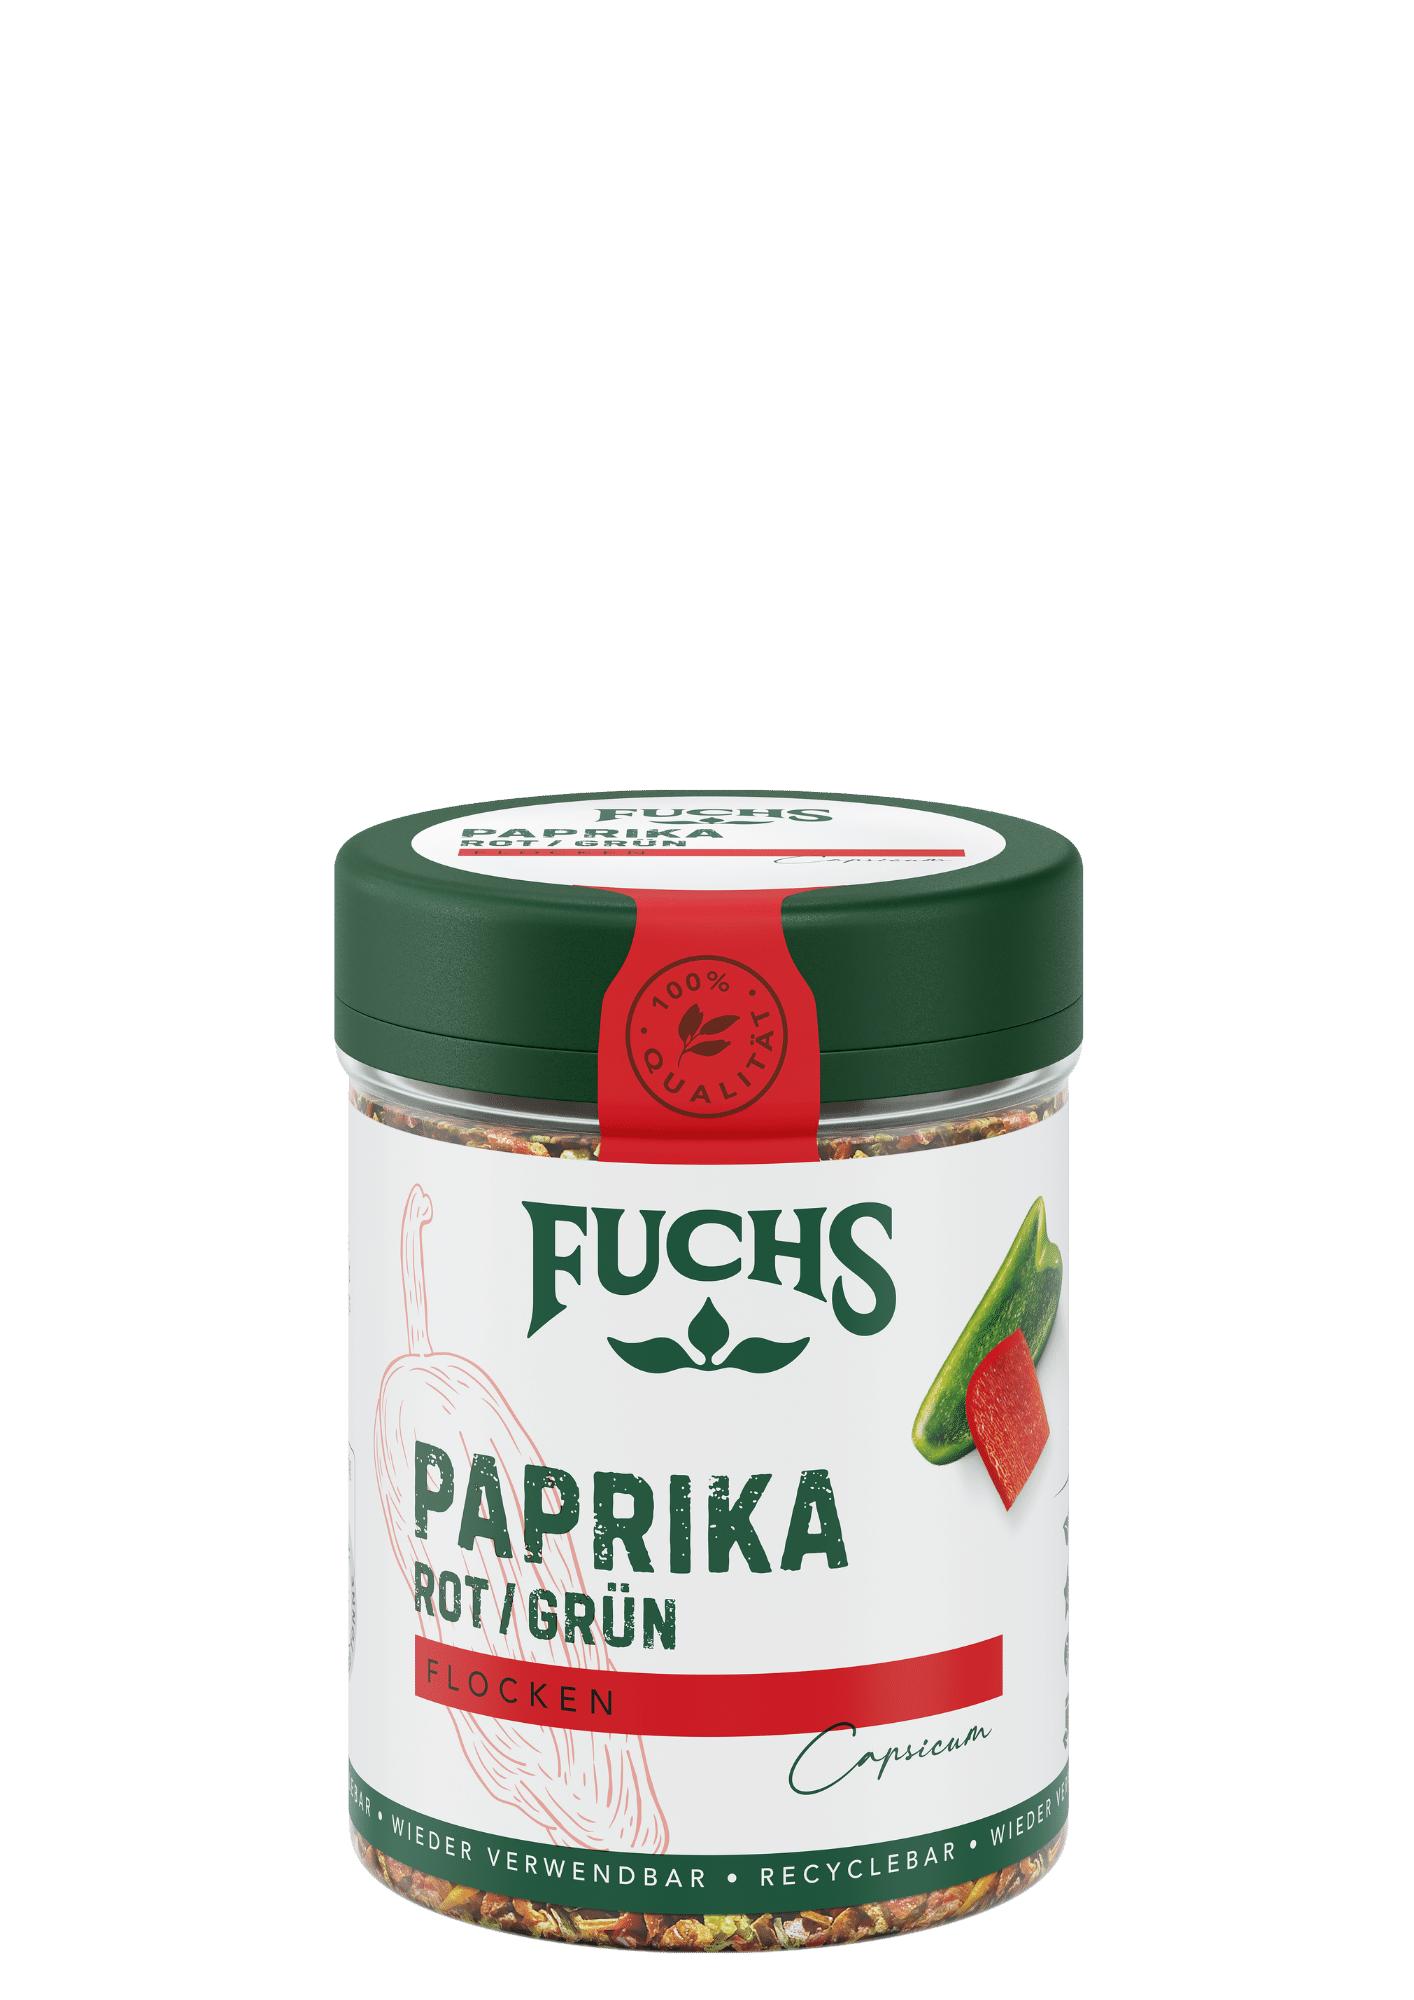 Paprika rotgrün Flocken